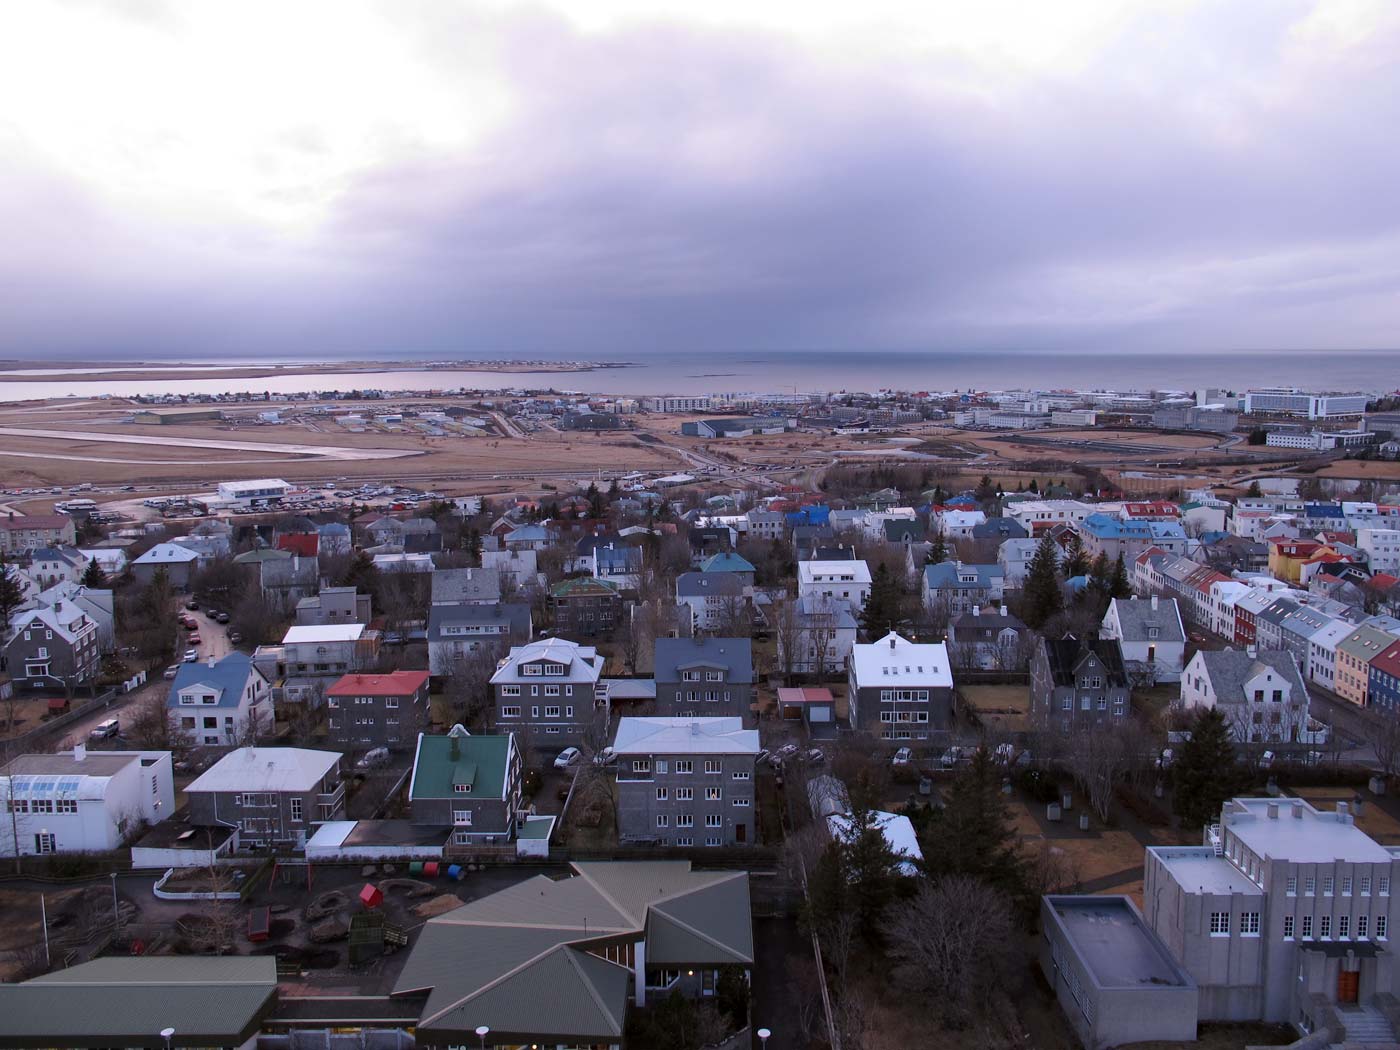 Reykjavík. Pictures taken from the highest spot (Hallgrímskirkja chruch). - WSW. (20 December 2012)